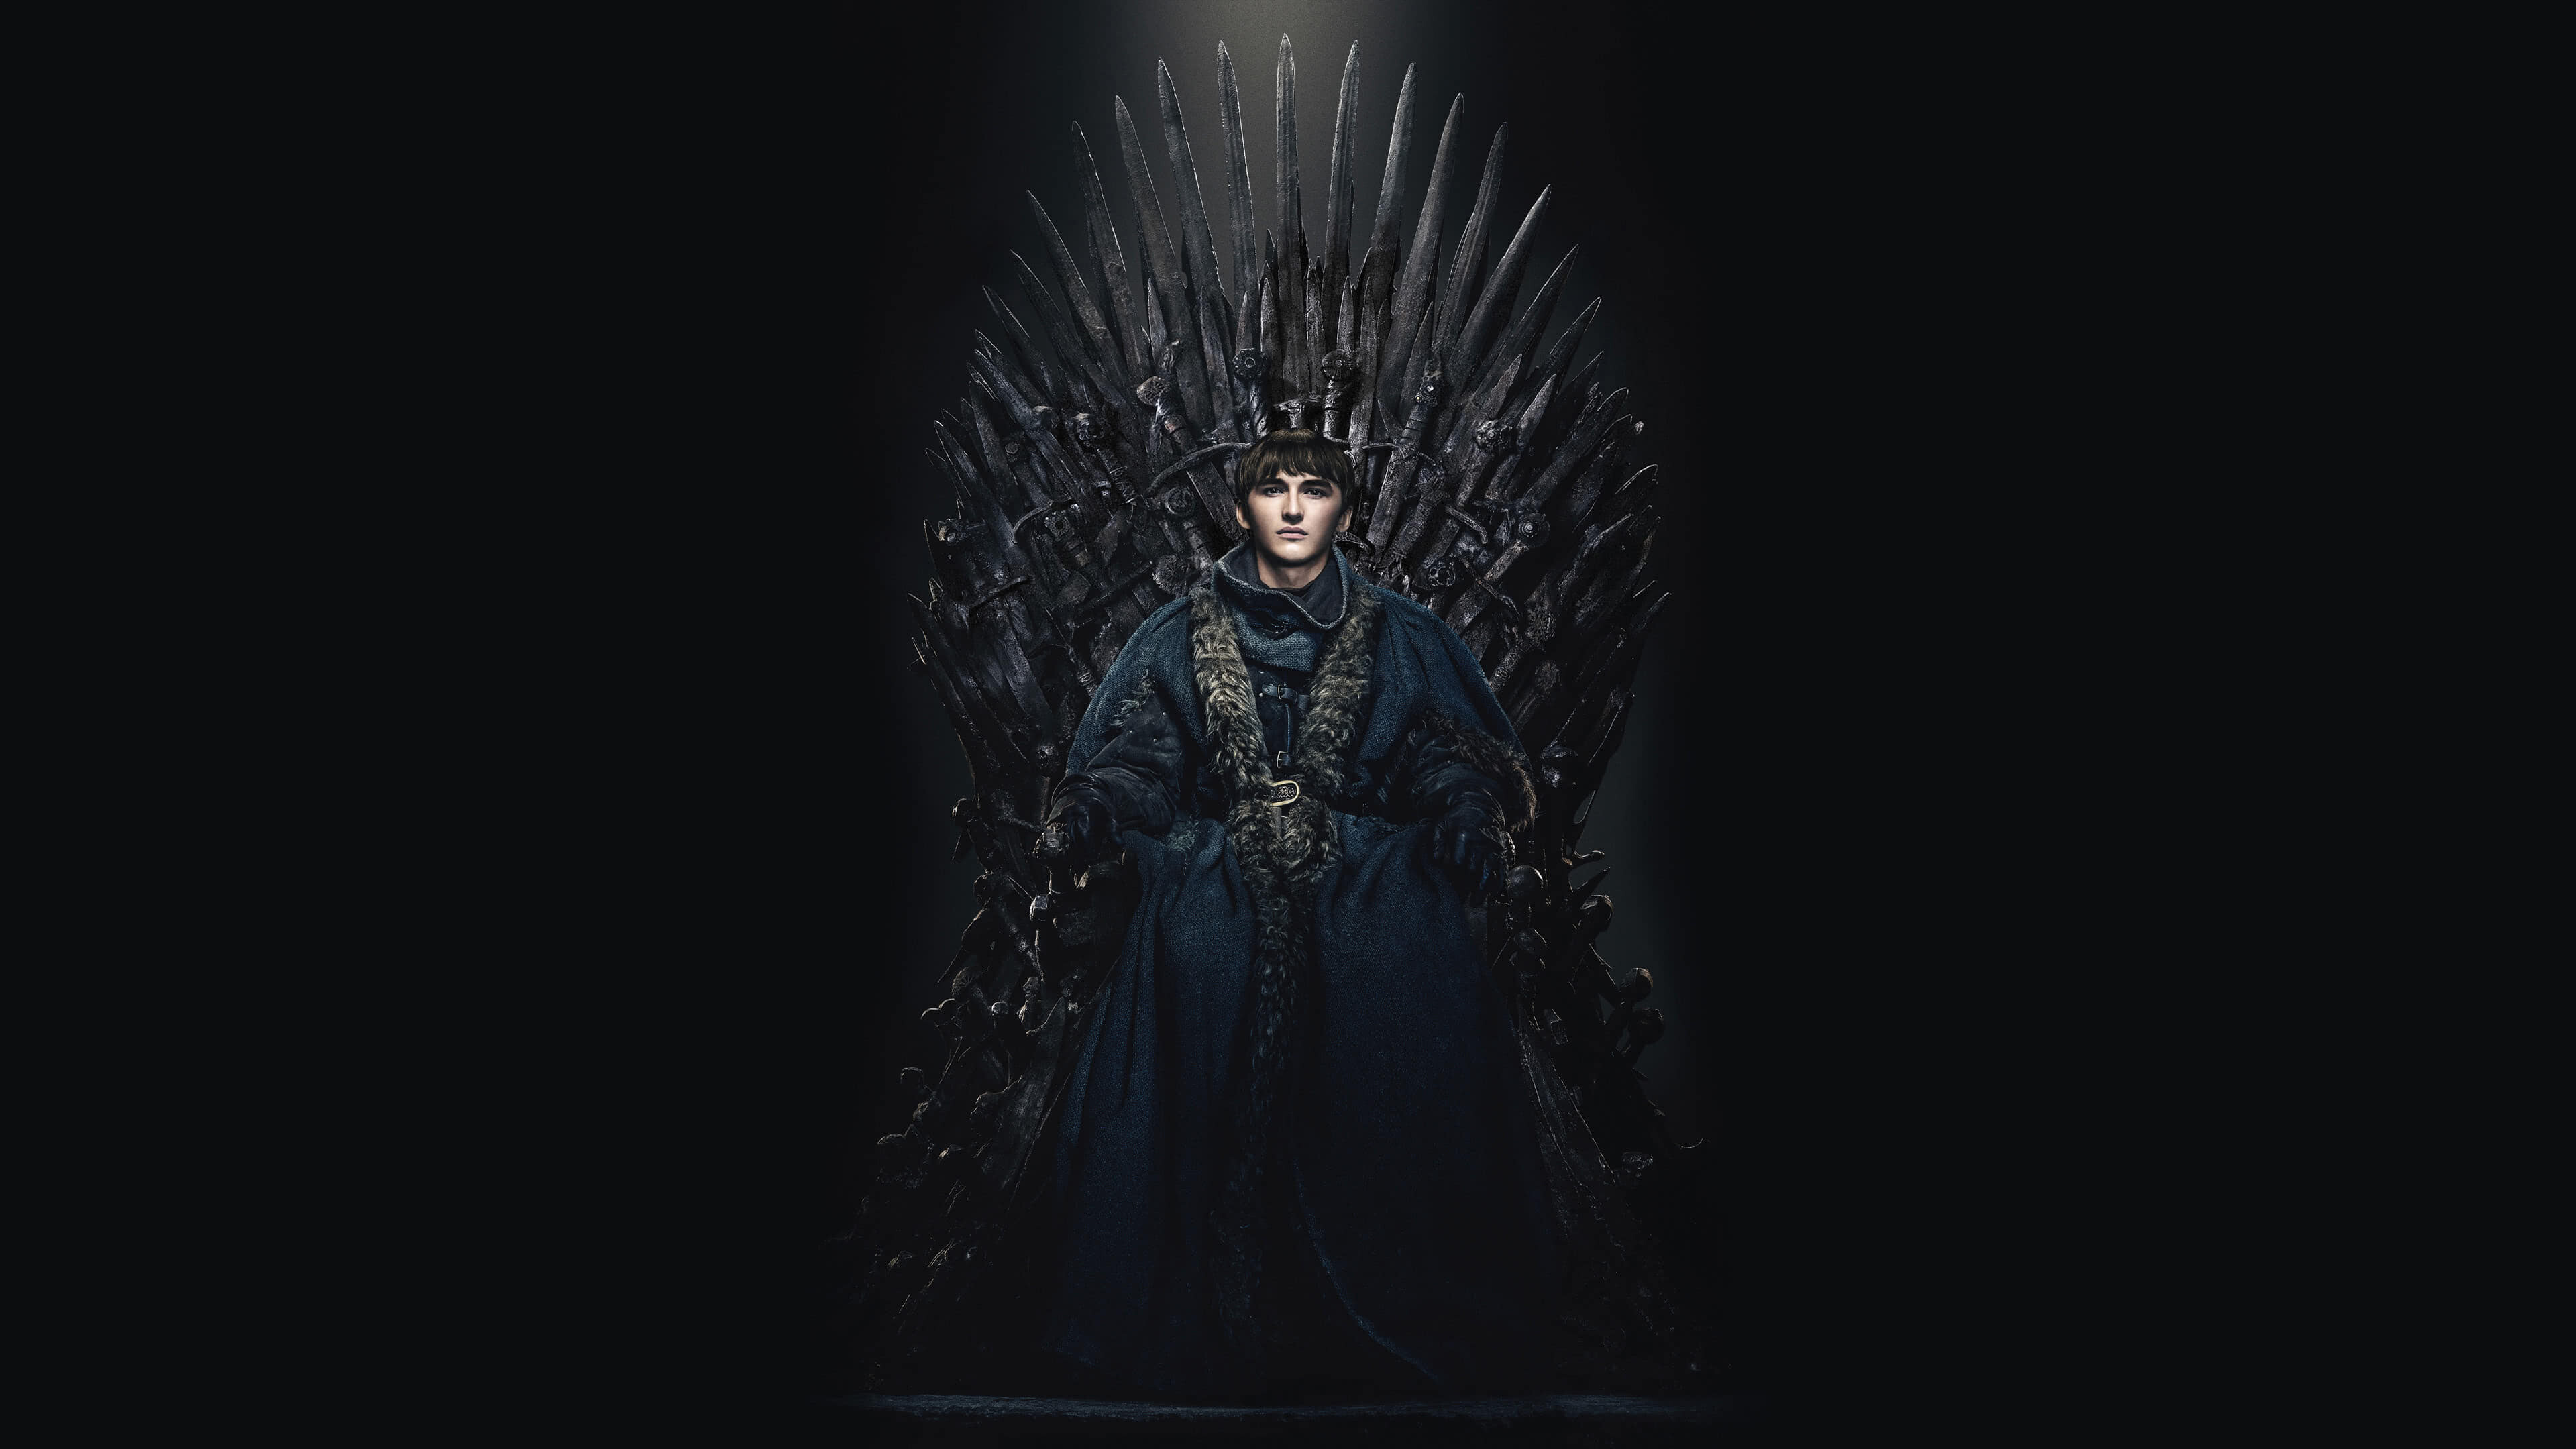 Game of Thrones: Iron Throne, Bran Stark, portrayed by Isaac Hempstead Wright. 3840x2160 4K Wallpaper.